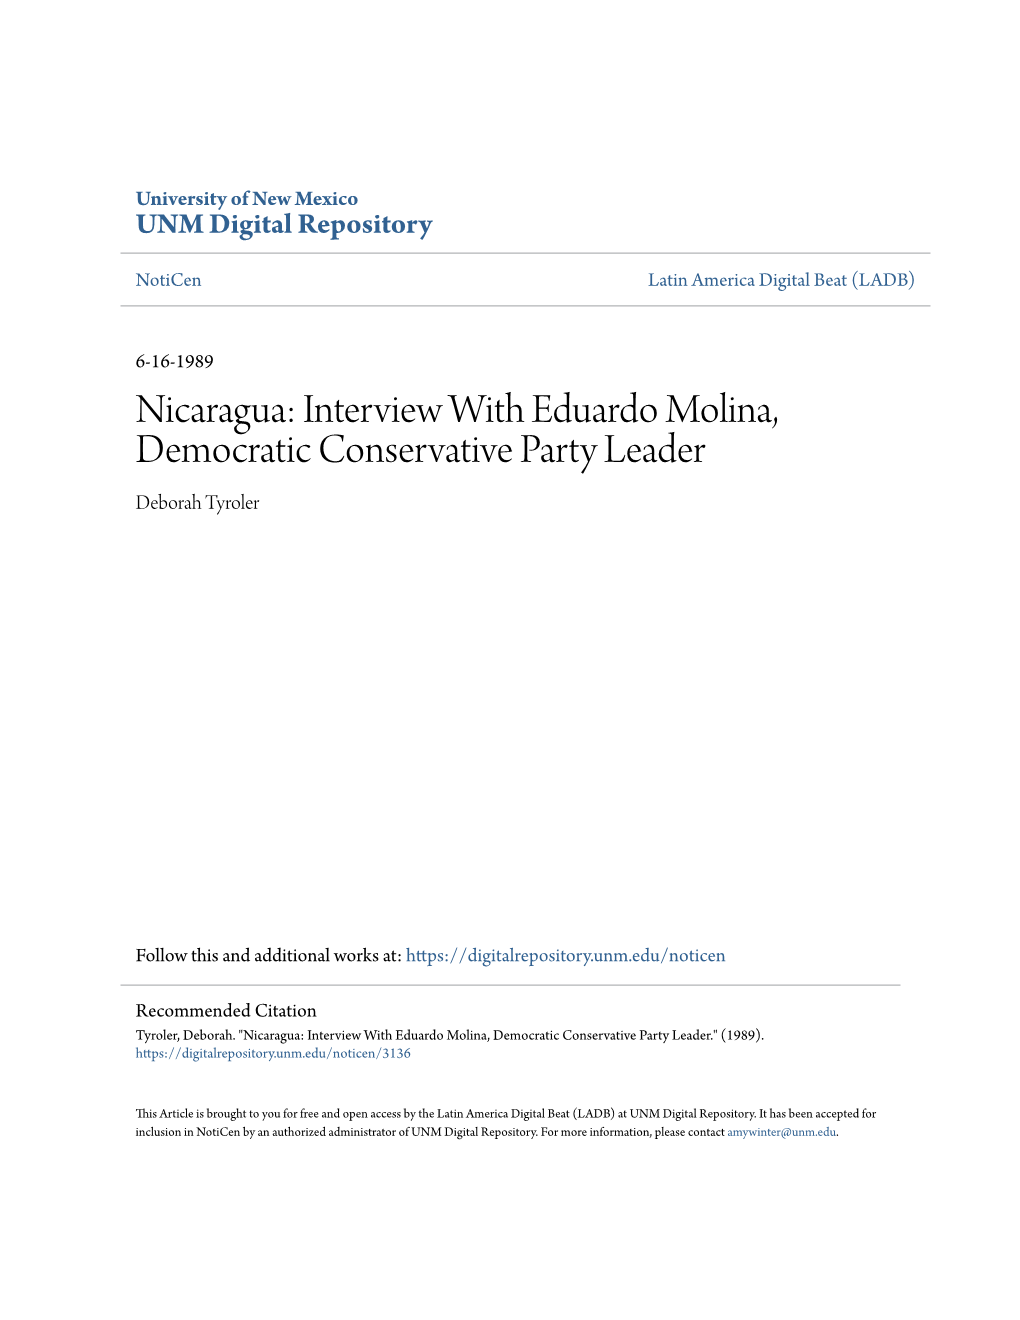 Nicaragua: Interview with Eduardo Molina, Democratic Conservative Party Leader Deborah Tyroler